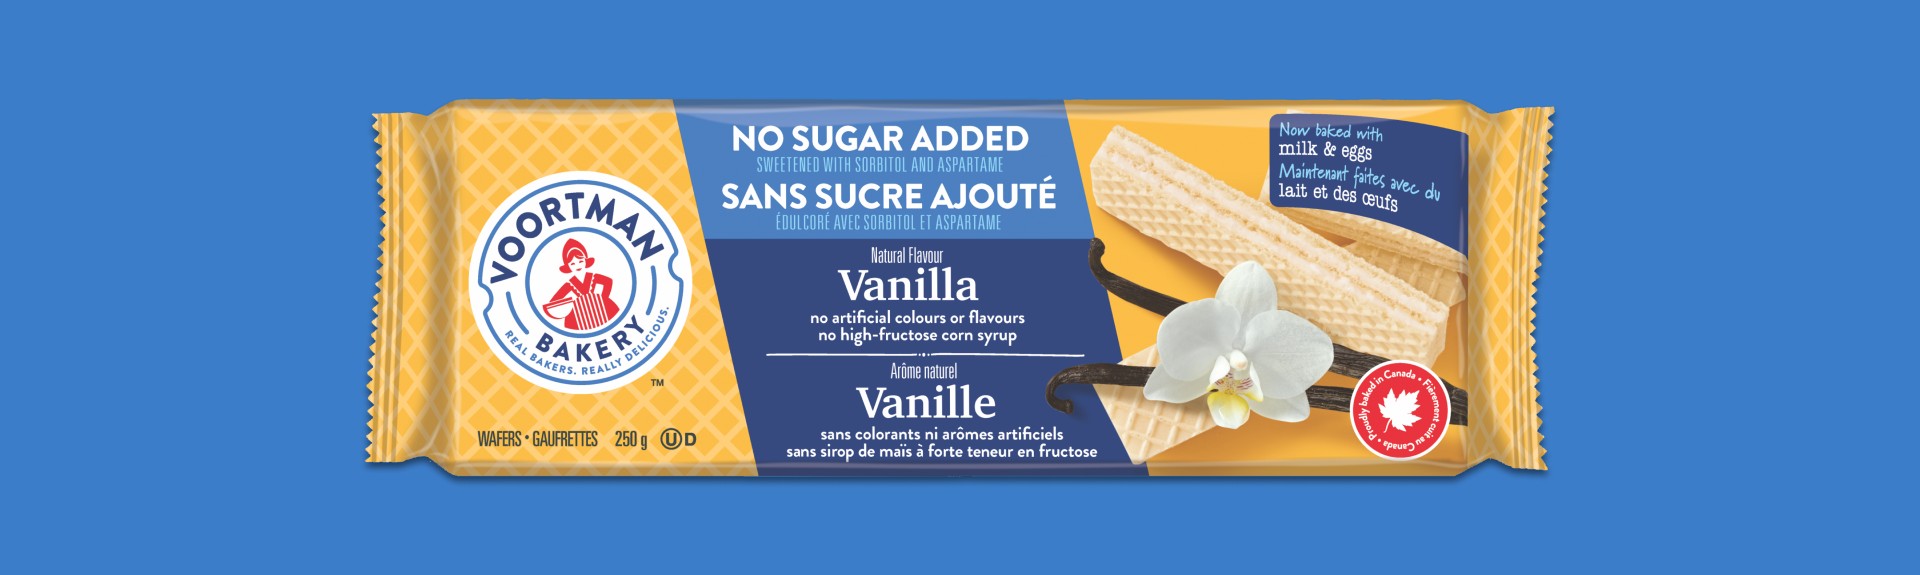 Zero Sugar Vanilla wafers